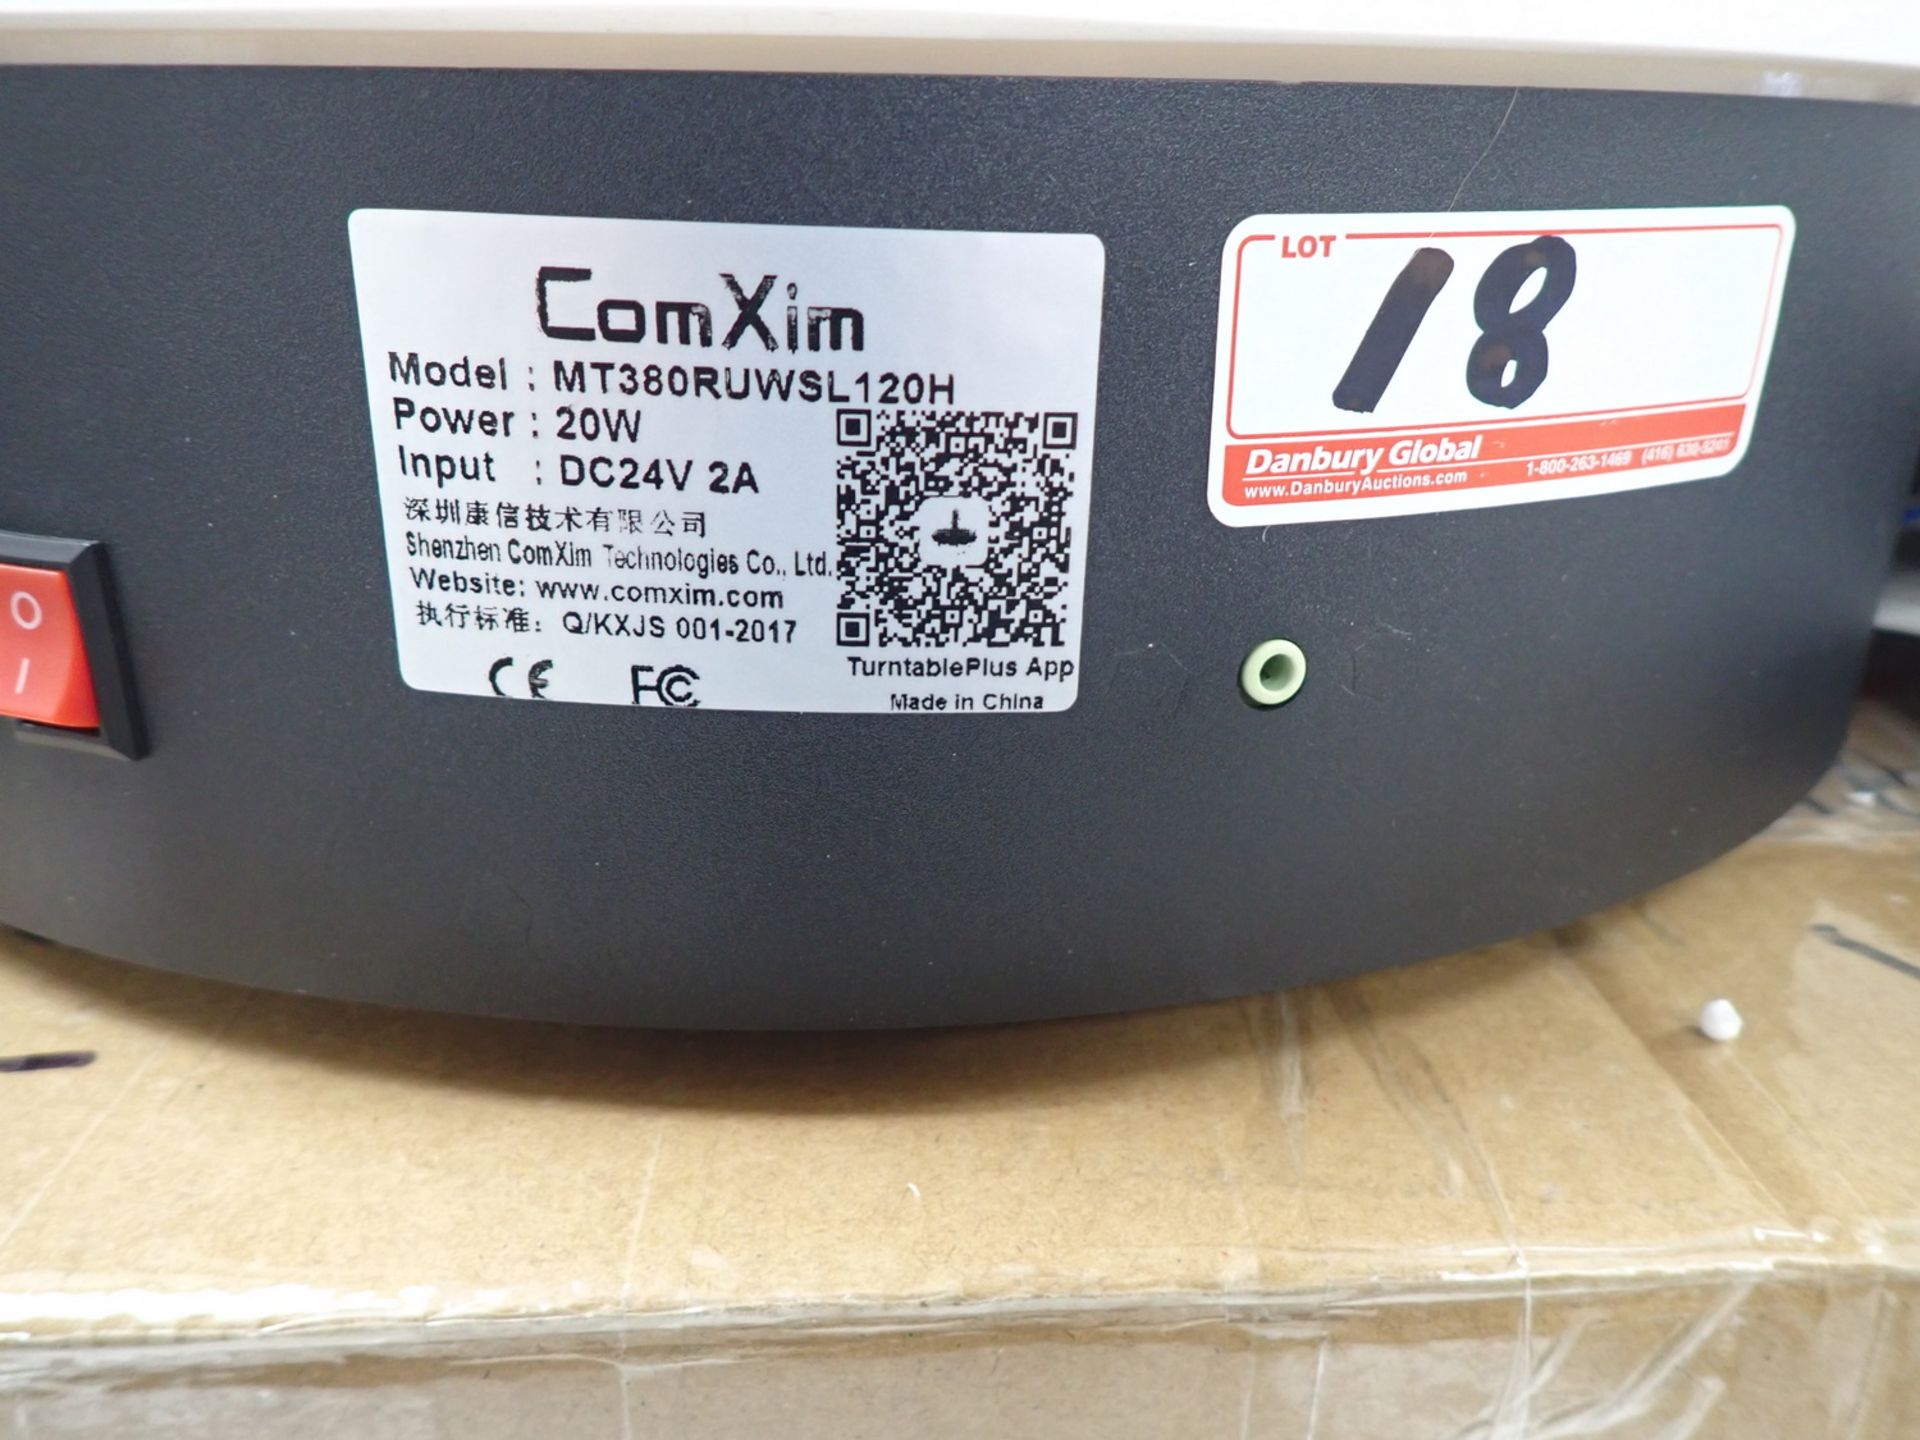 COMXIM MT 380 RUWSL 120H 20W 14 5/8" TURNTABLE W/ REMOTE - Image 3 of 3